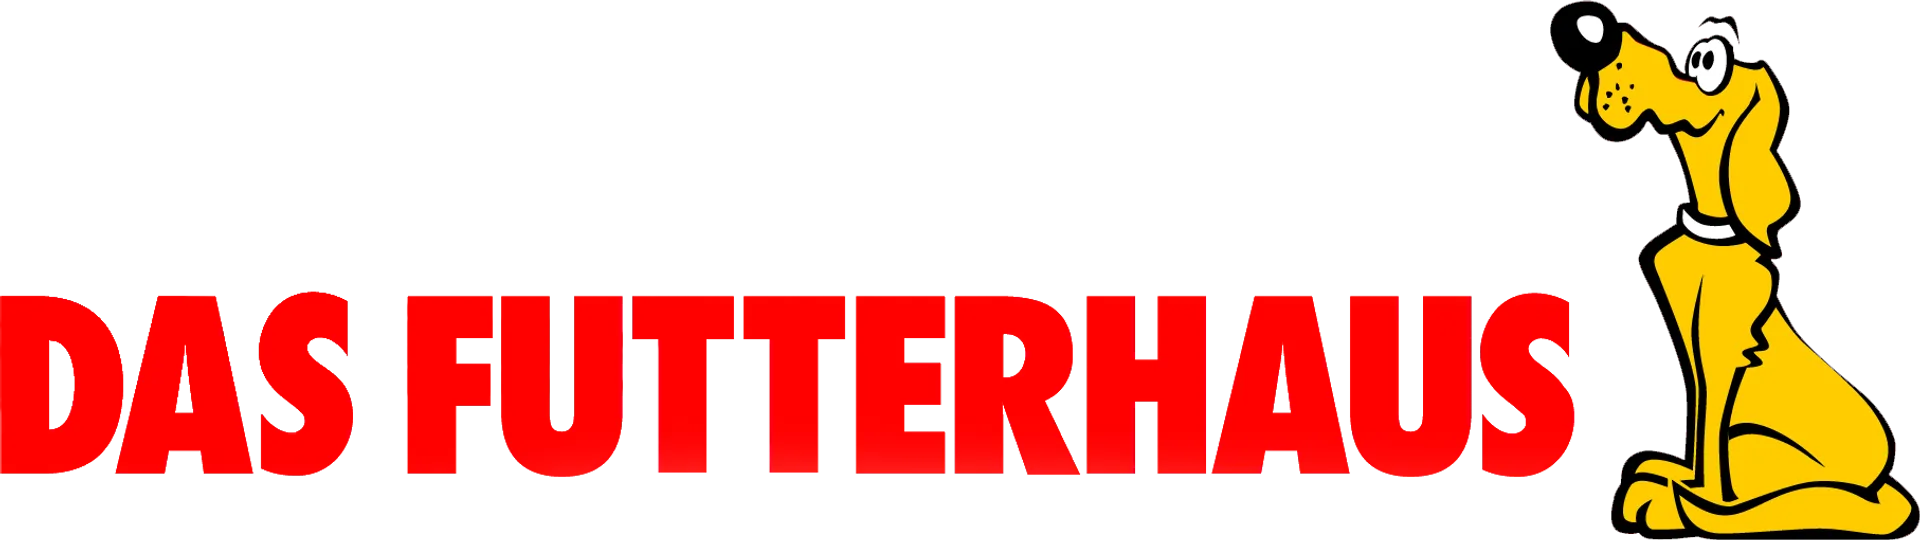 FUTTERHAUS logo die aktuell Flugblatt